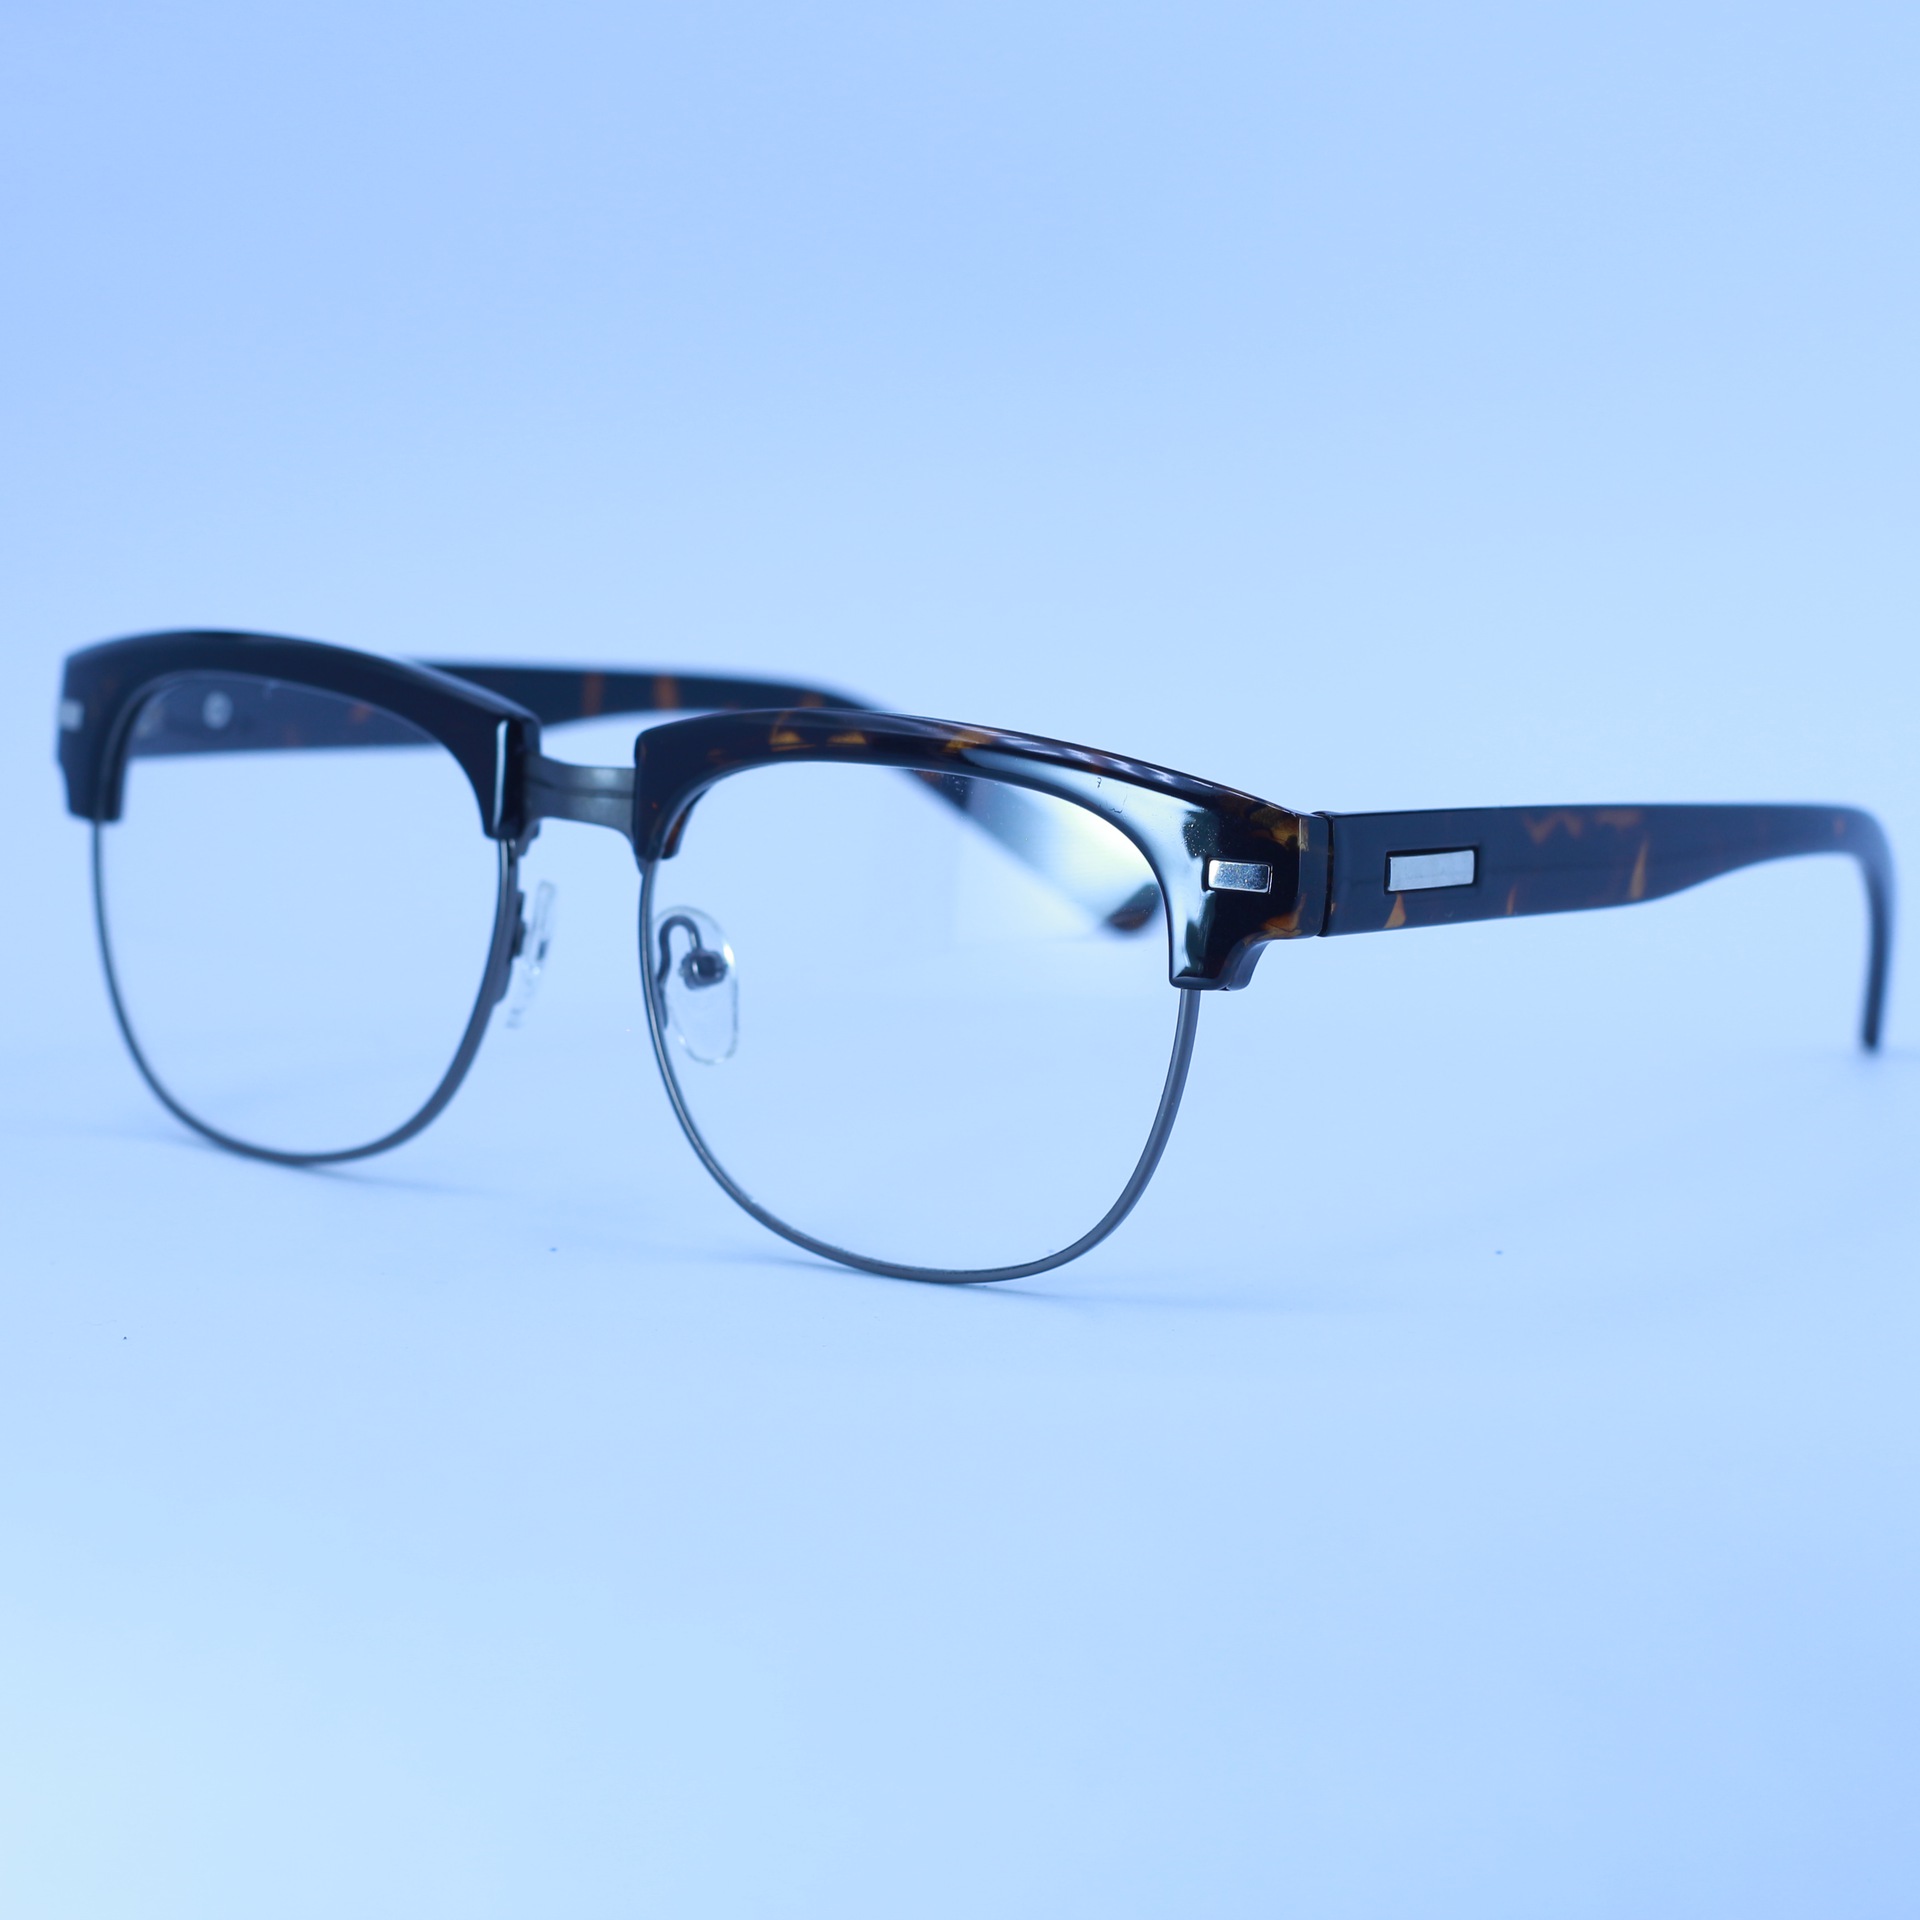 Sungee Optical Frames 8030 - Buy Online Eye Glasses Frames in Pakistan ...